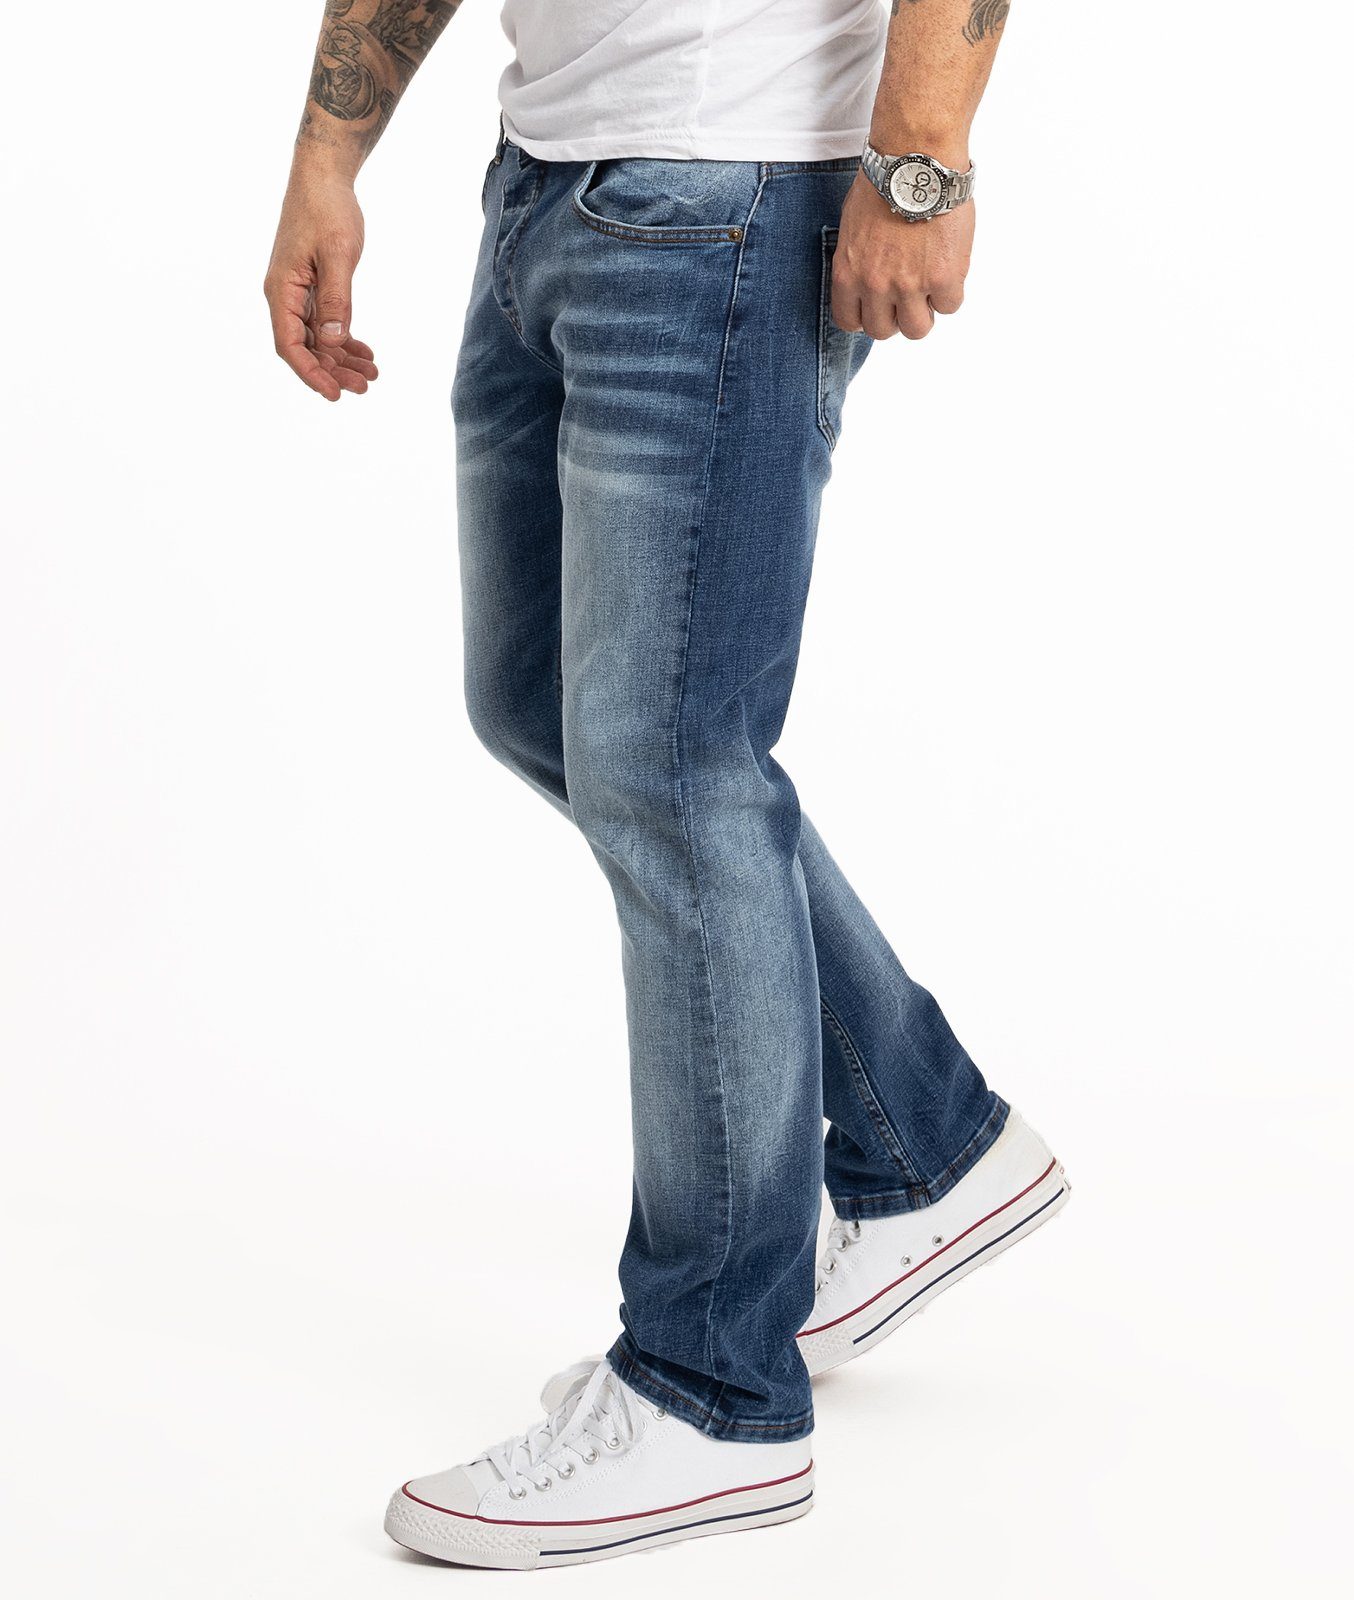 Jeans Straight-Jeans Blau Rock Herren Creek RC-2358 Stonewashed